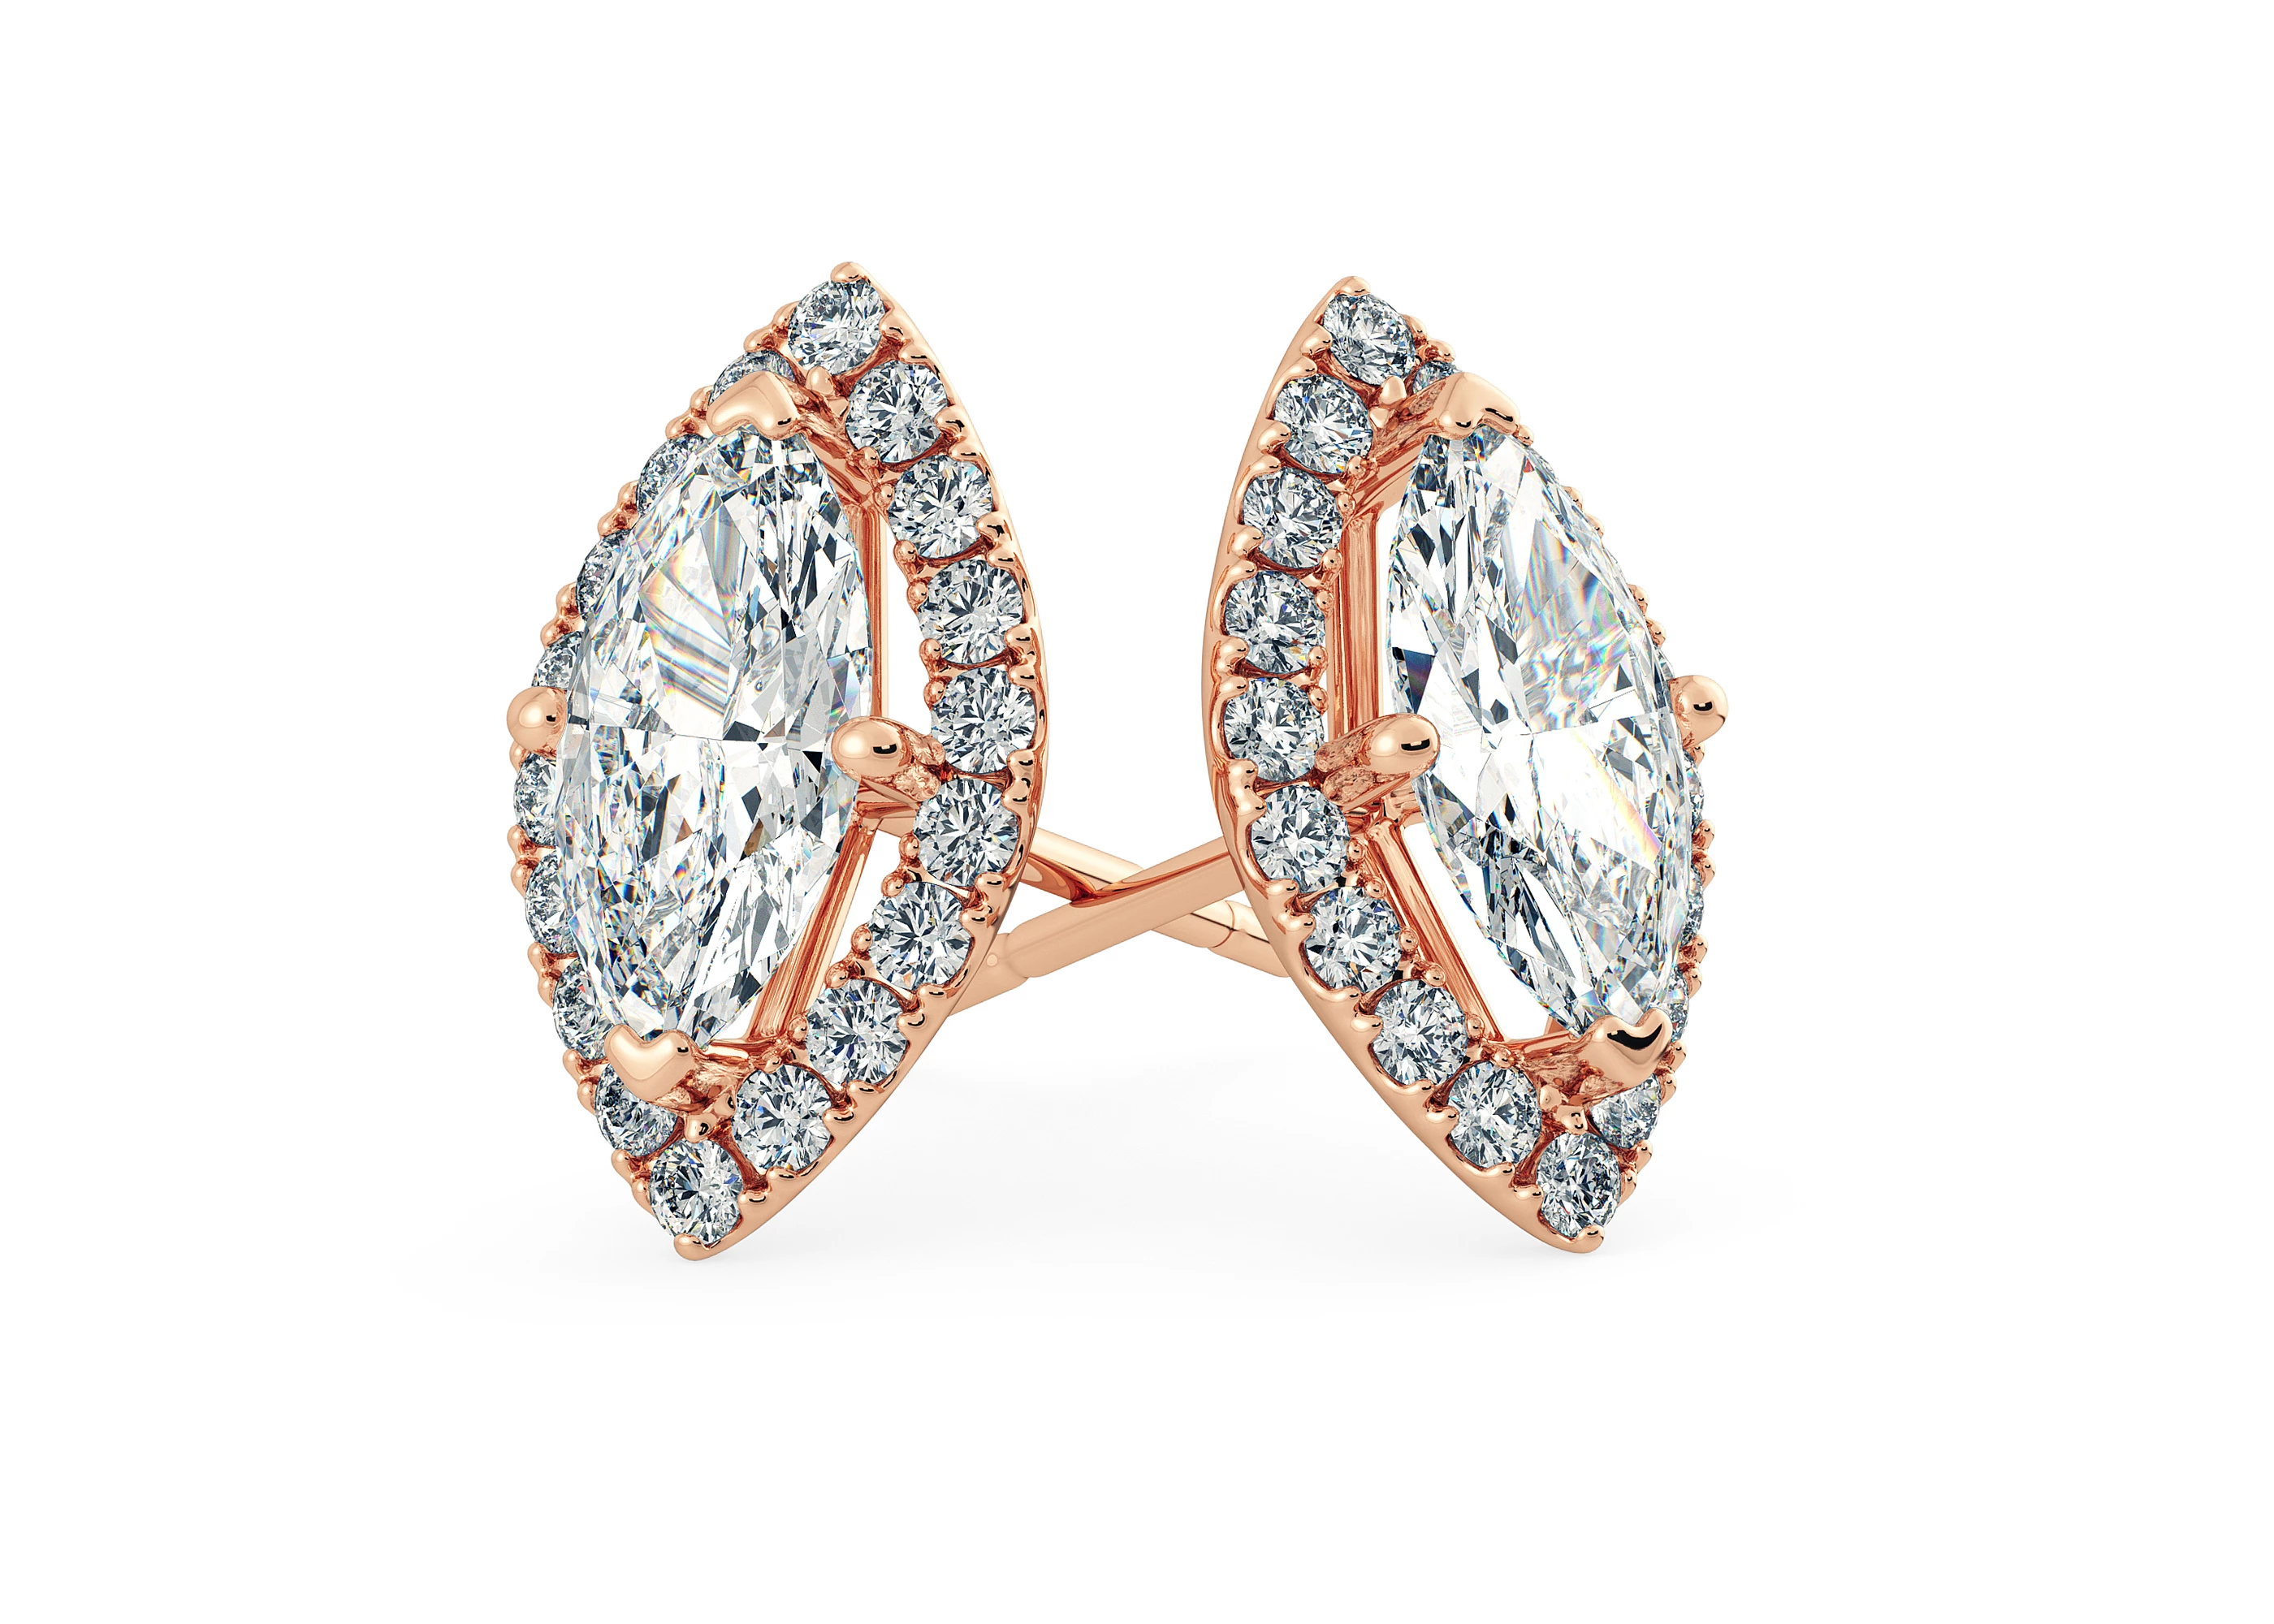 Bijou Marquise Diamond Stud Earrings in 18K Rose Gold with Screw Backs